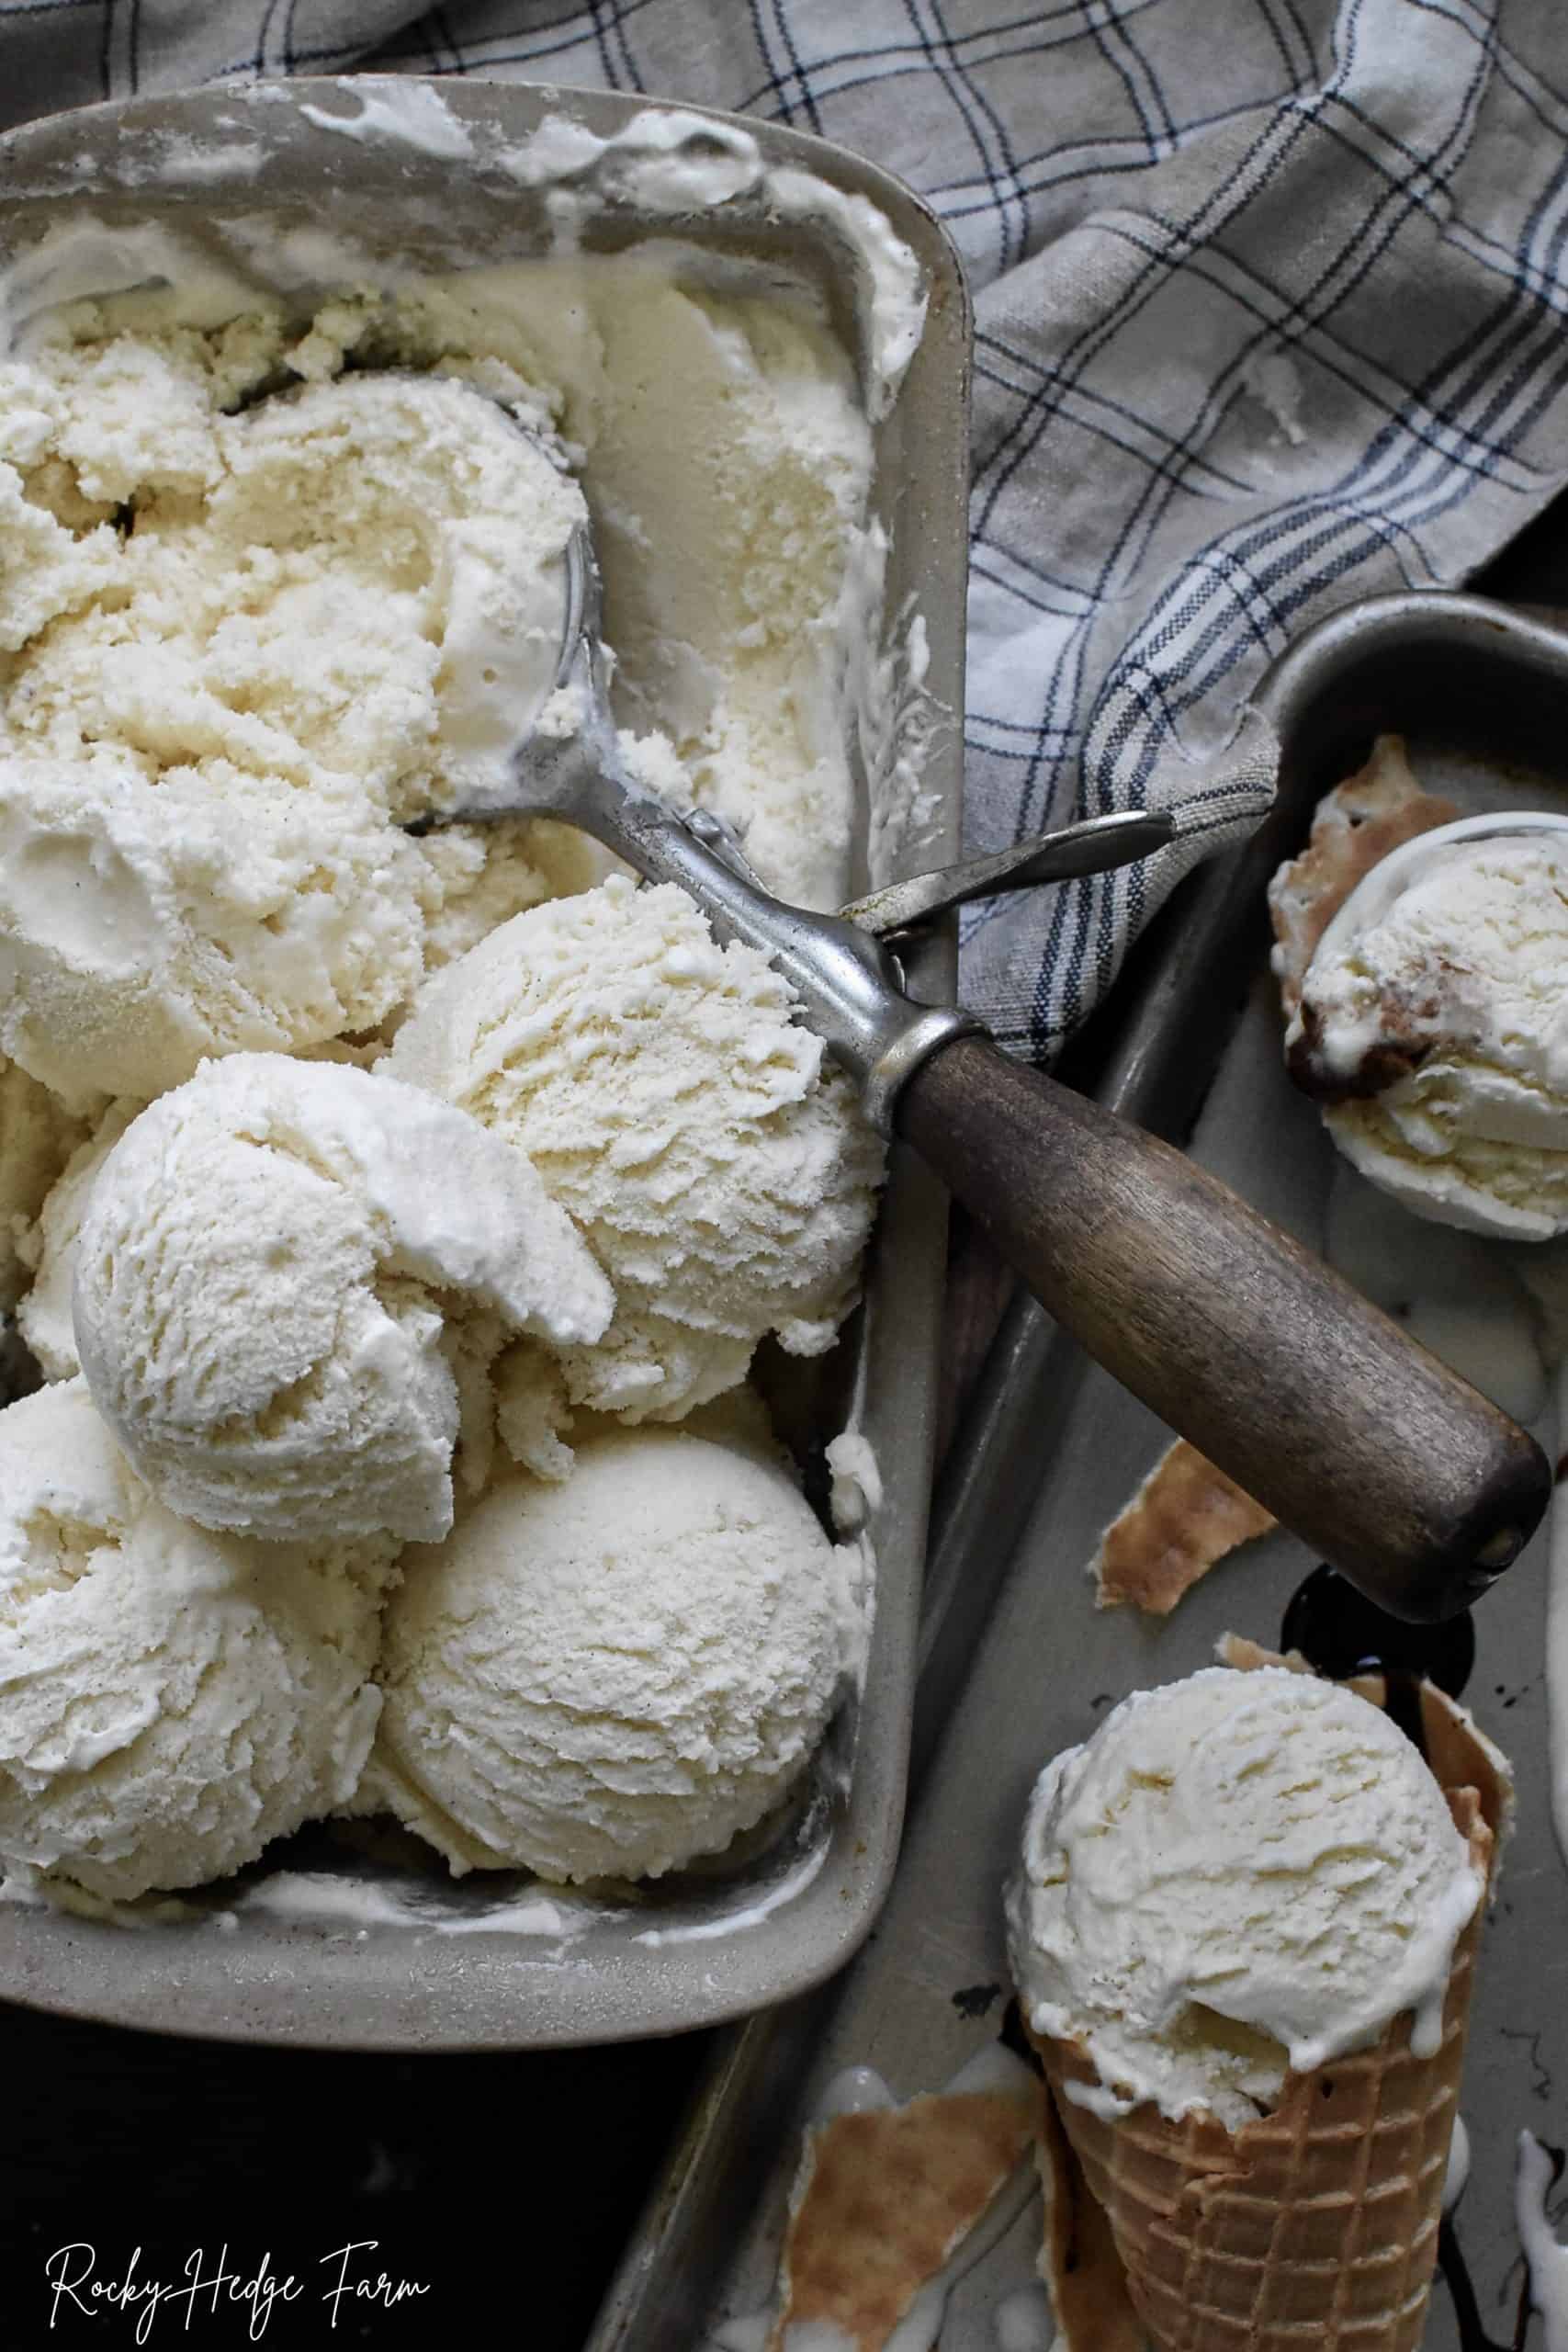 https://erdtknyop8g.exactdn.com/wp-content/uploads/2021/07/Homemade-Vanilla-Ice-Cream-Recipe-scaled.jpg?strip=all&lossy=1&ssl=1